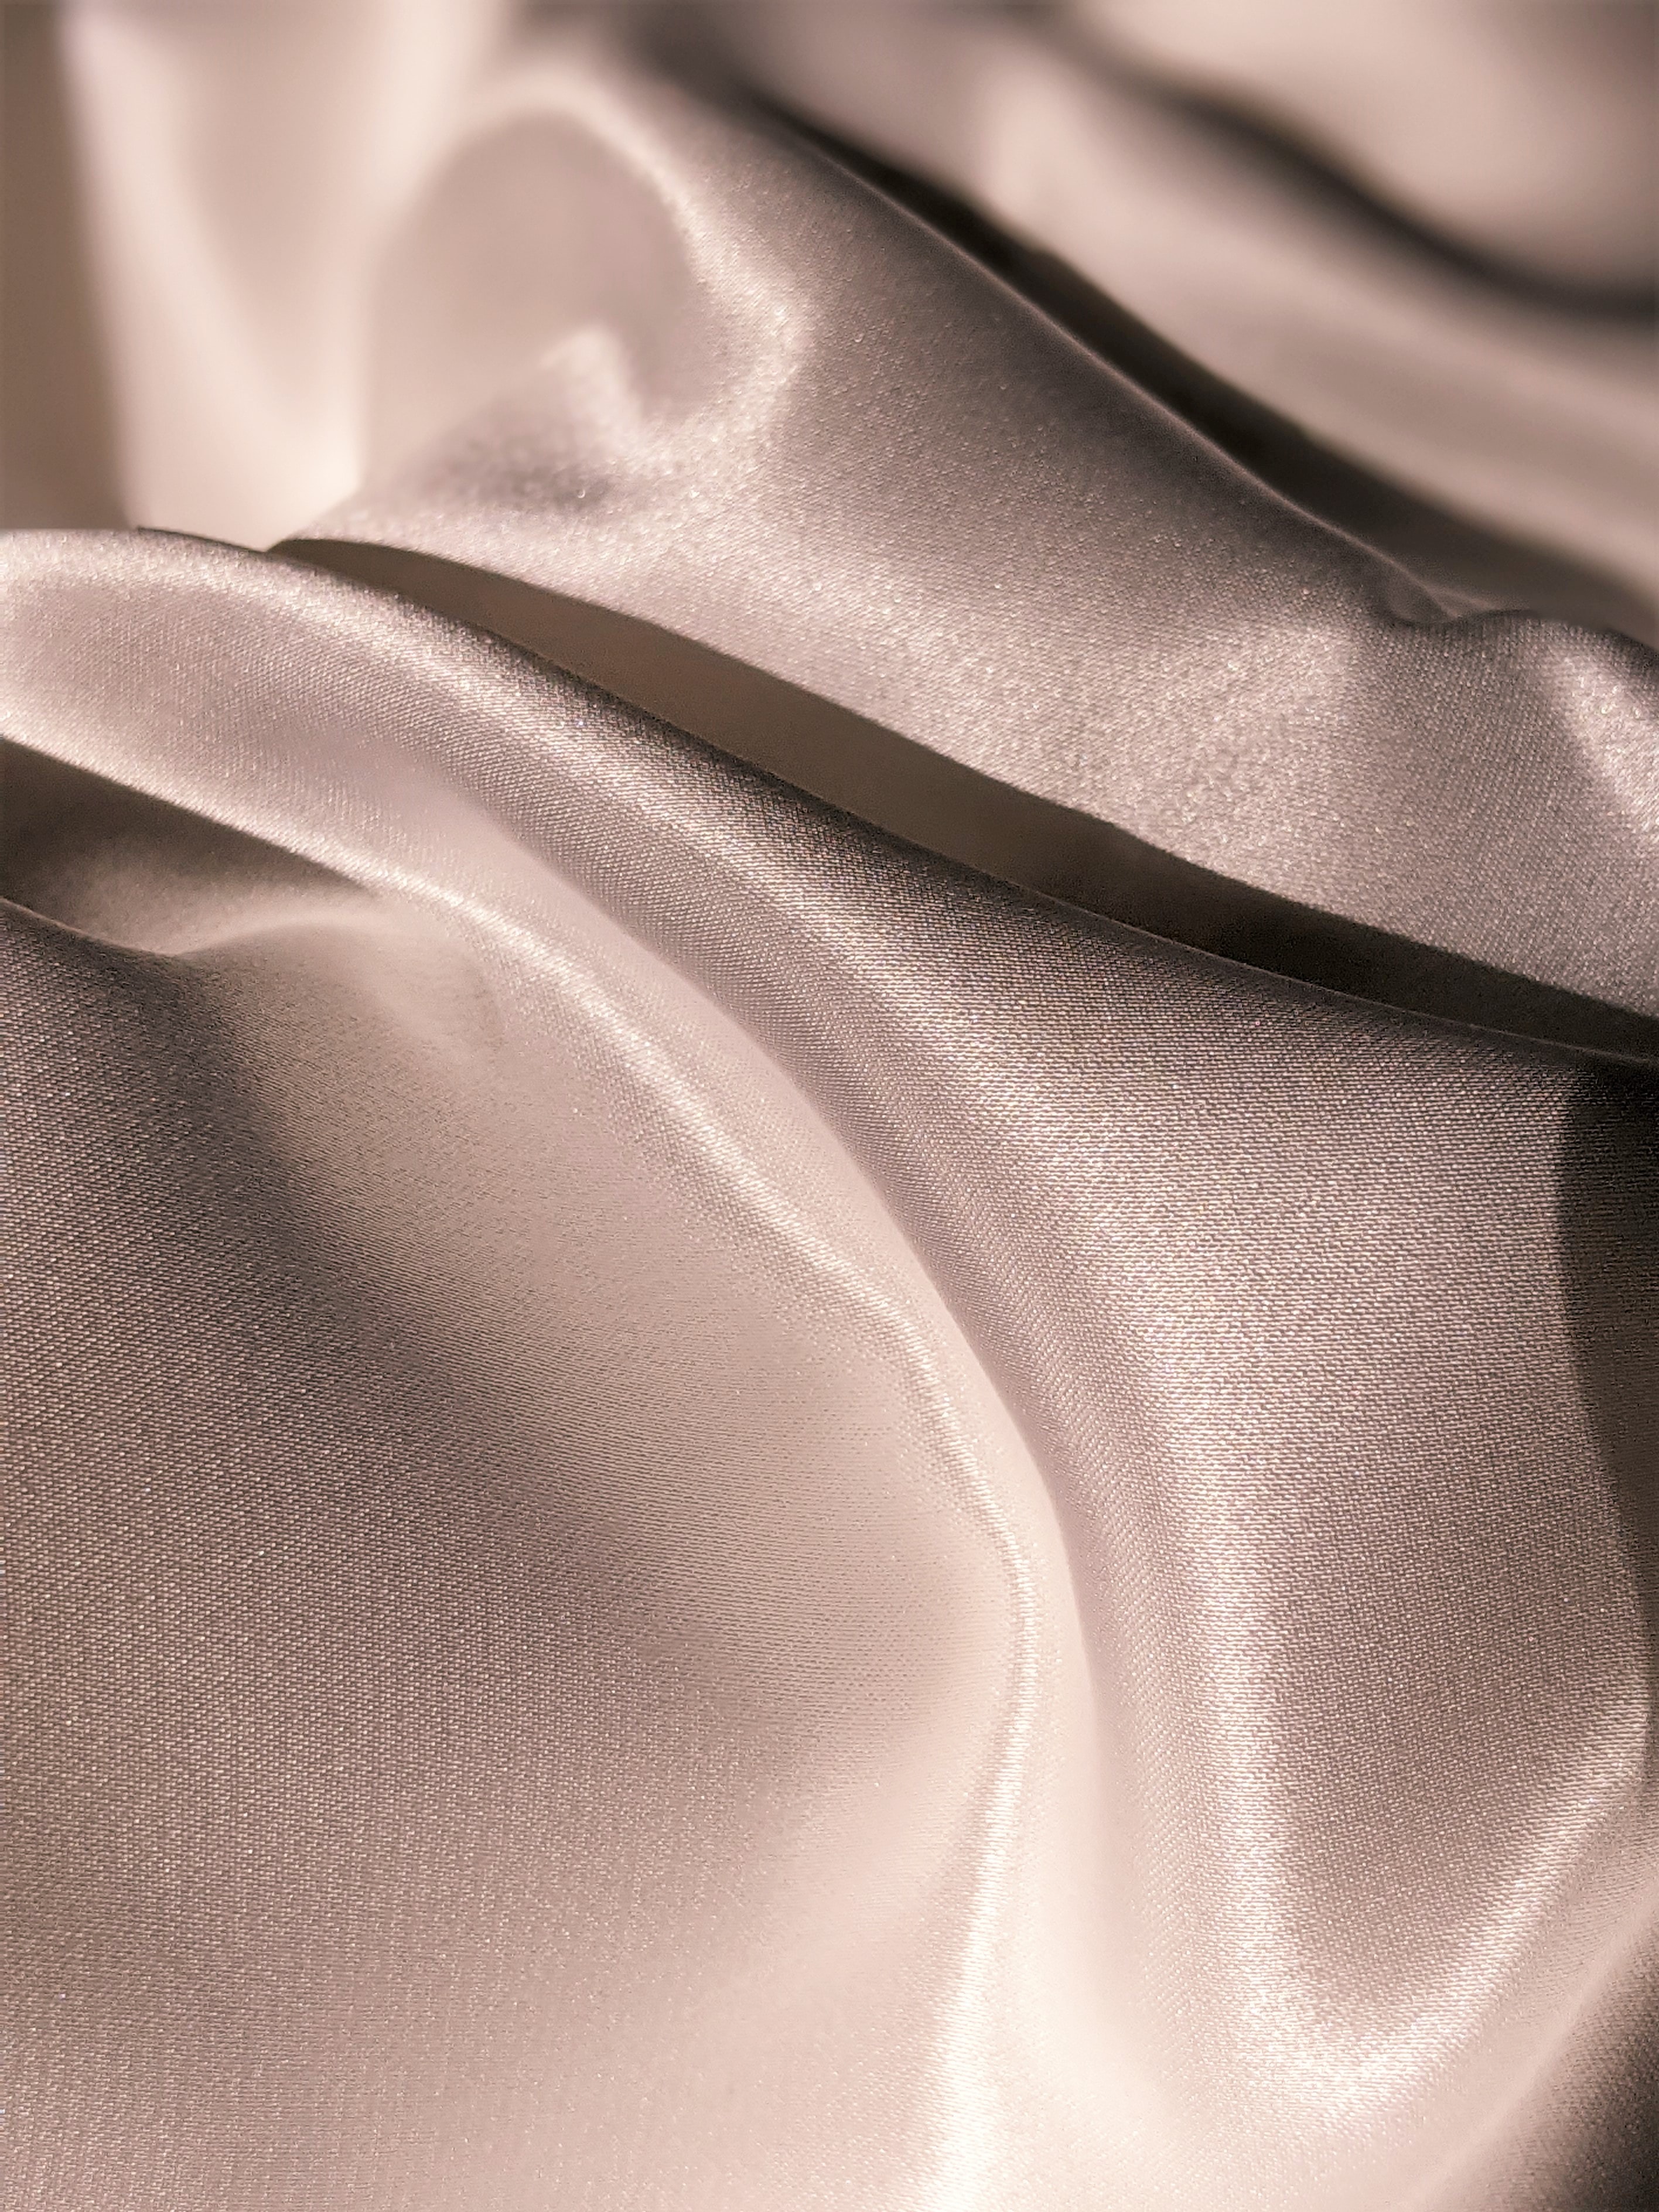 texture, textures, cloth, folds, pleating, silk